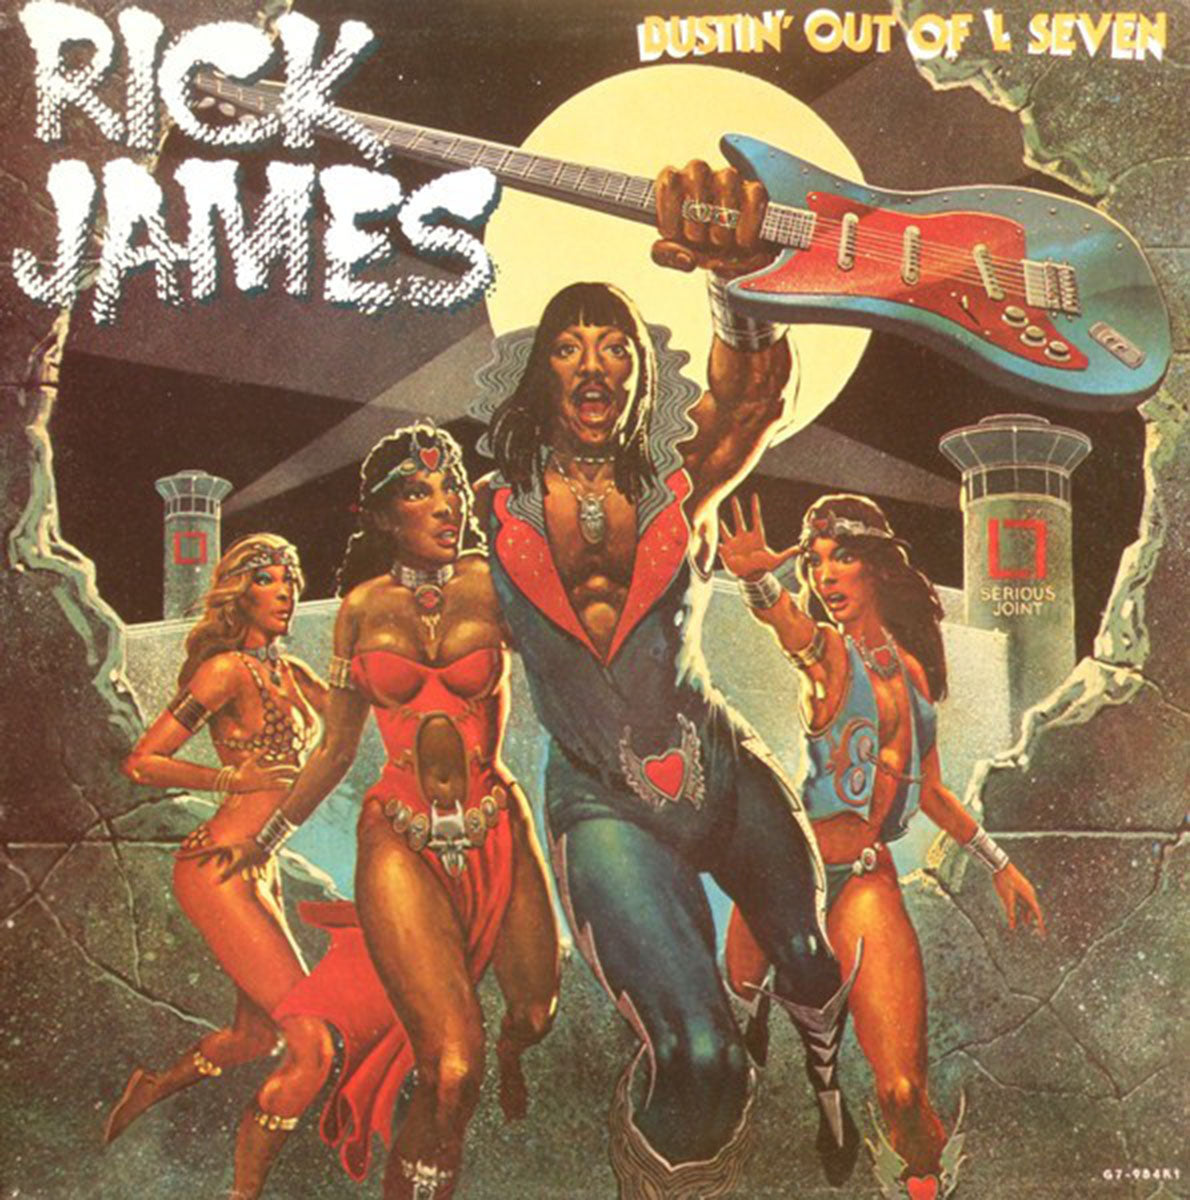 Rick James – Bustin' Out Of L Seven - 1979 US Pressing in Shrinkwrap!